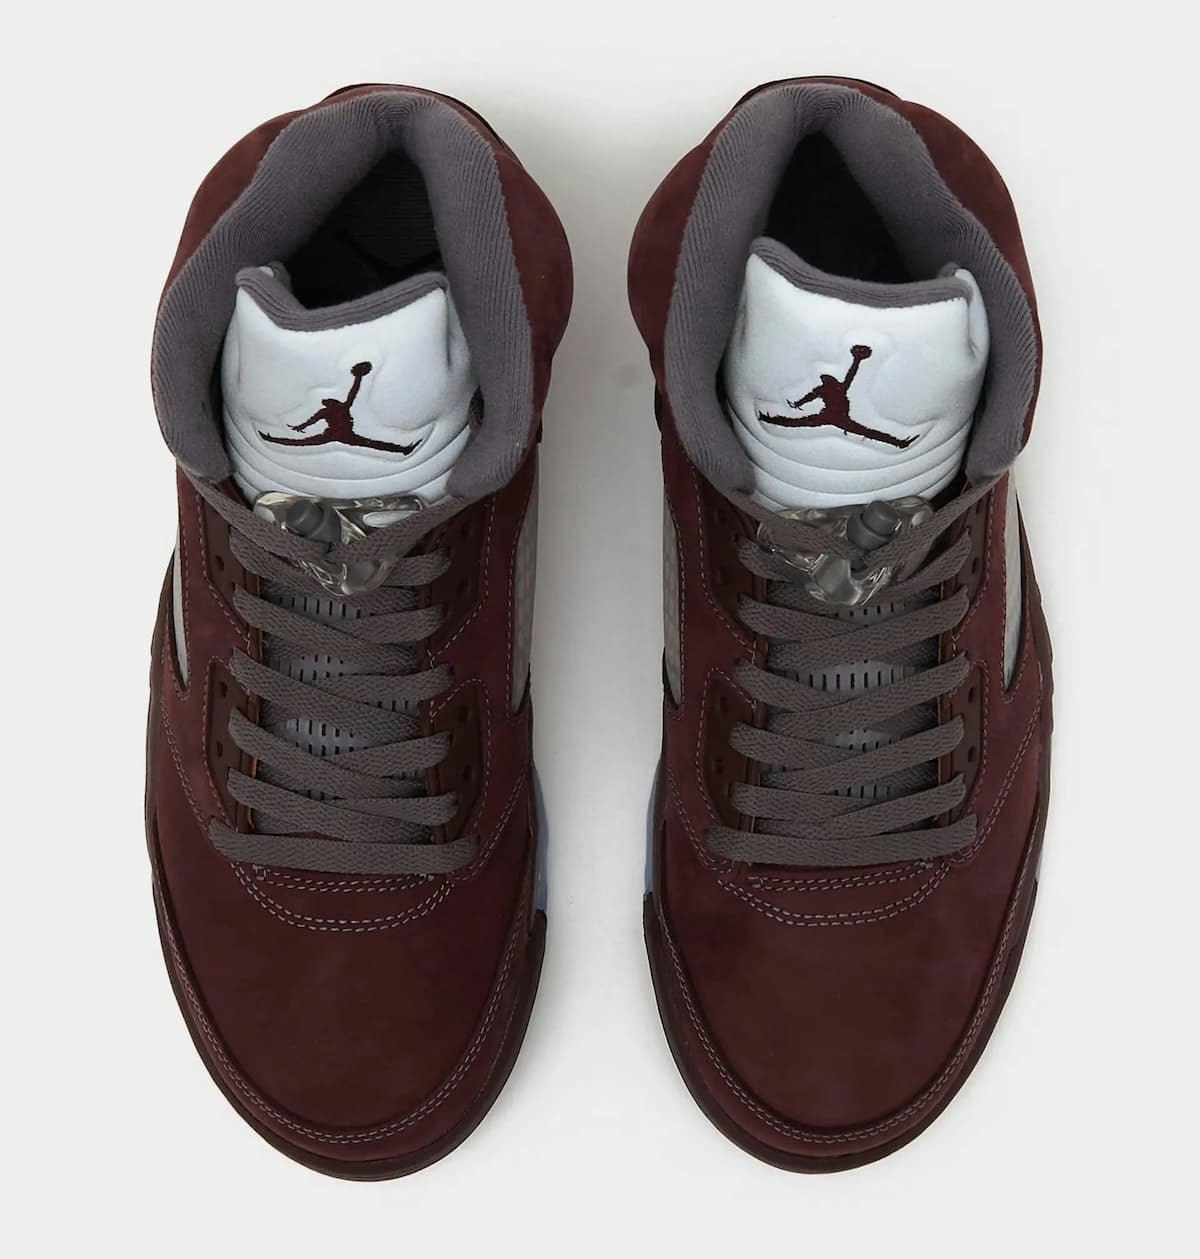 Air Jordan 5 "Burgundy"